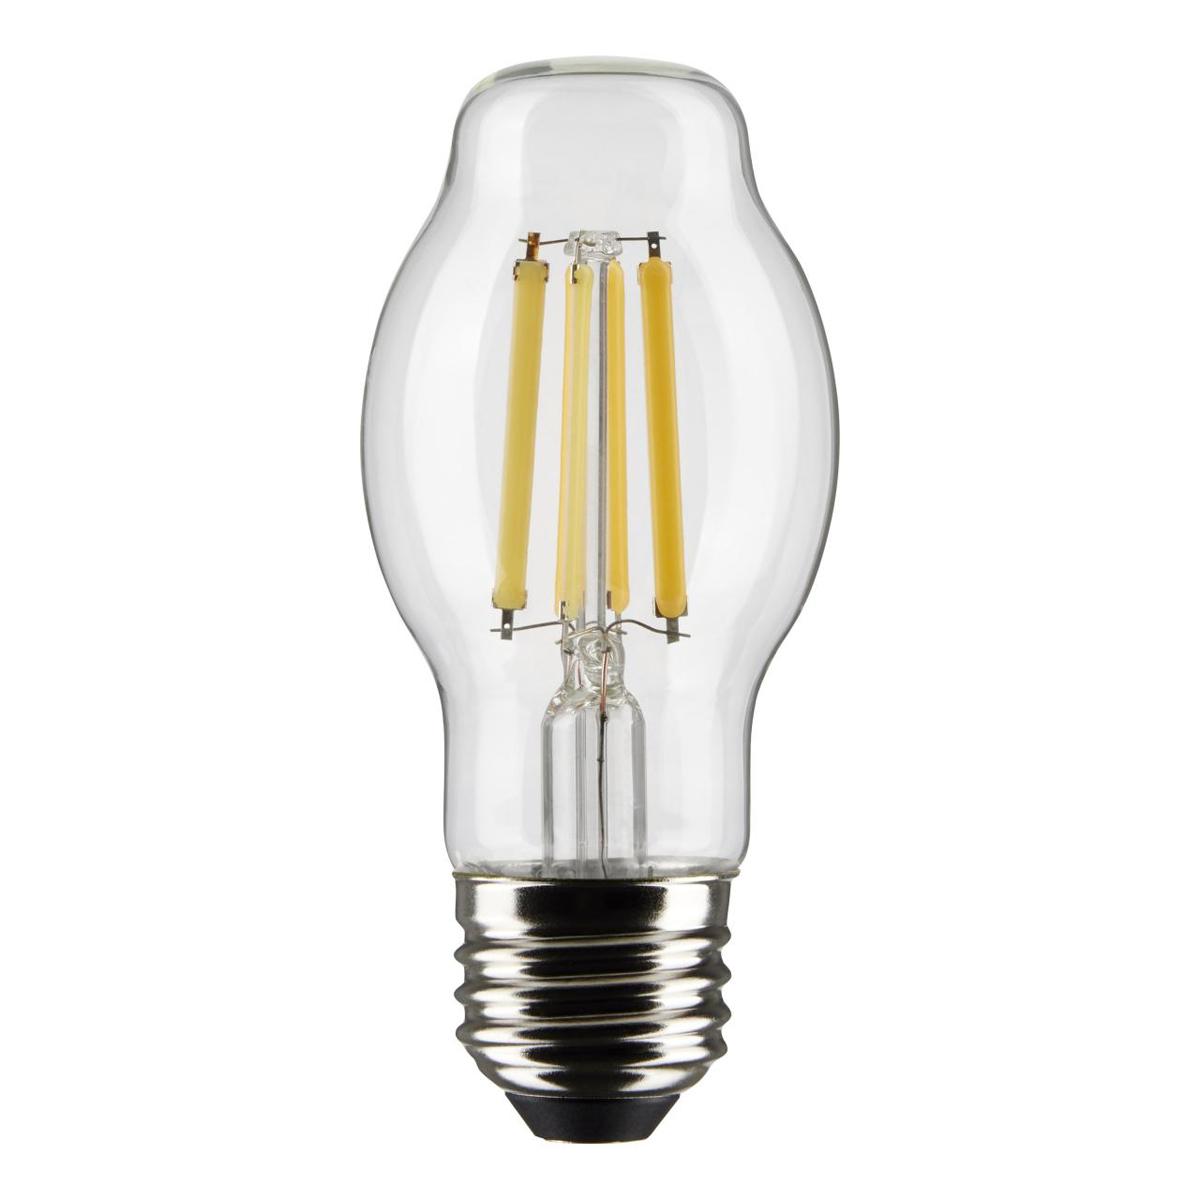 BT15 Bulged Tube Filament LED Bulb, 8 Watt, 800 Lumens, 2700K, E26 Medium Base, Clear Finish, Pack Of 2